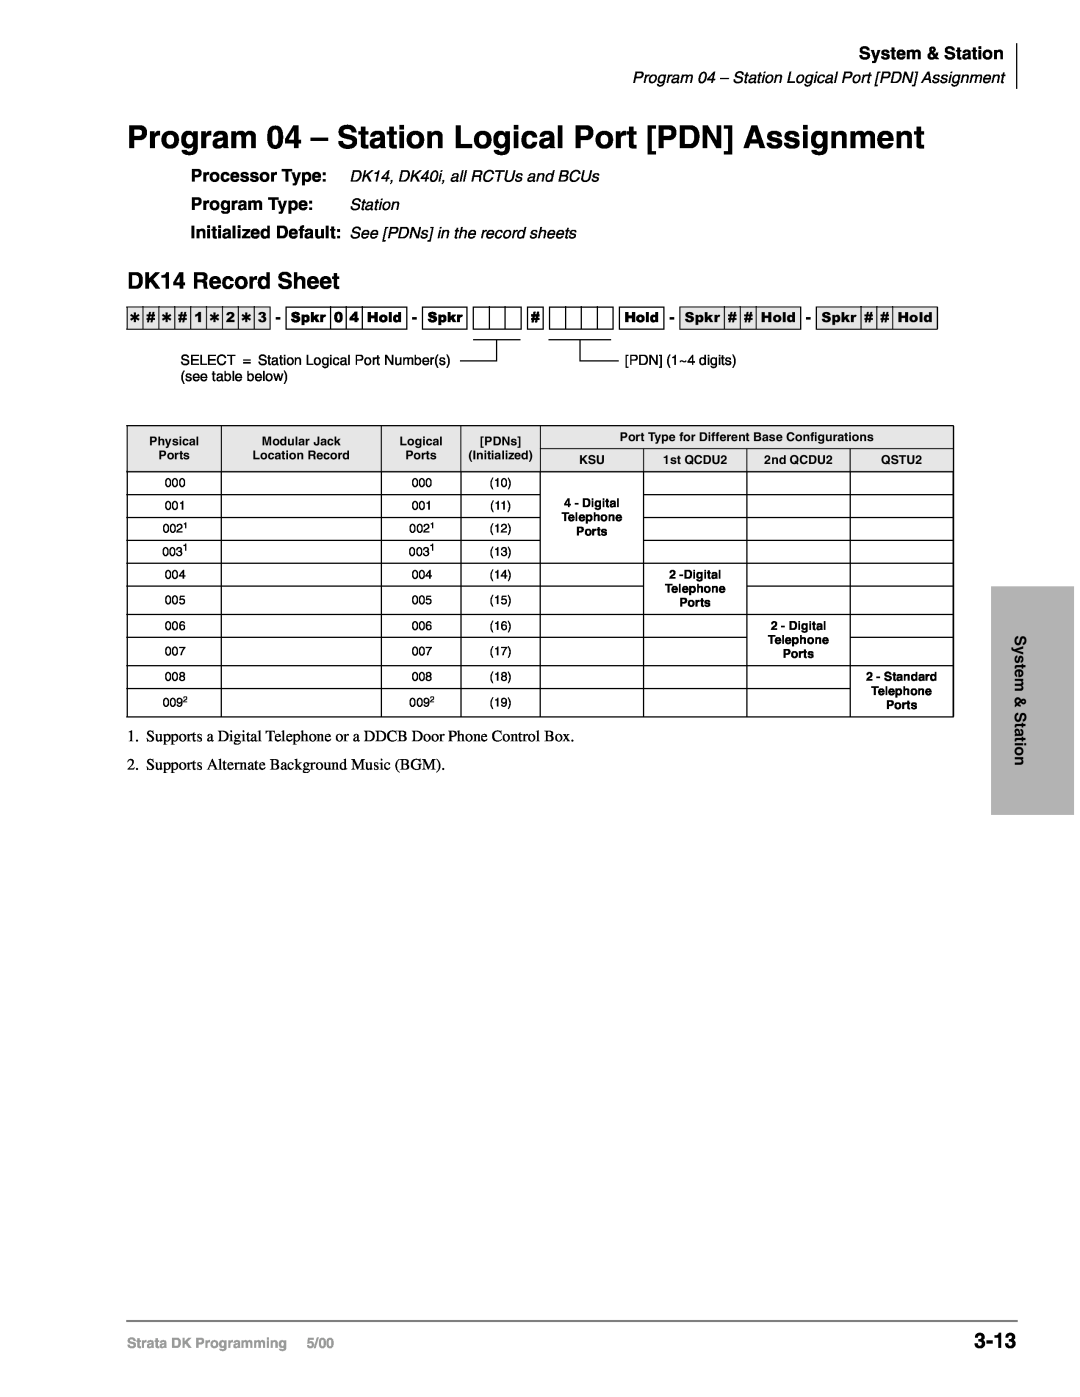 Toshiba DK424, dk14, DK40I manual Program 04 – Station Logical Port PDN Assignment, DK14 Record Sheet, 3-13, System & Station 